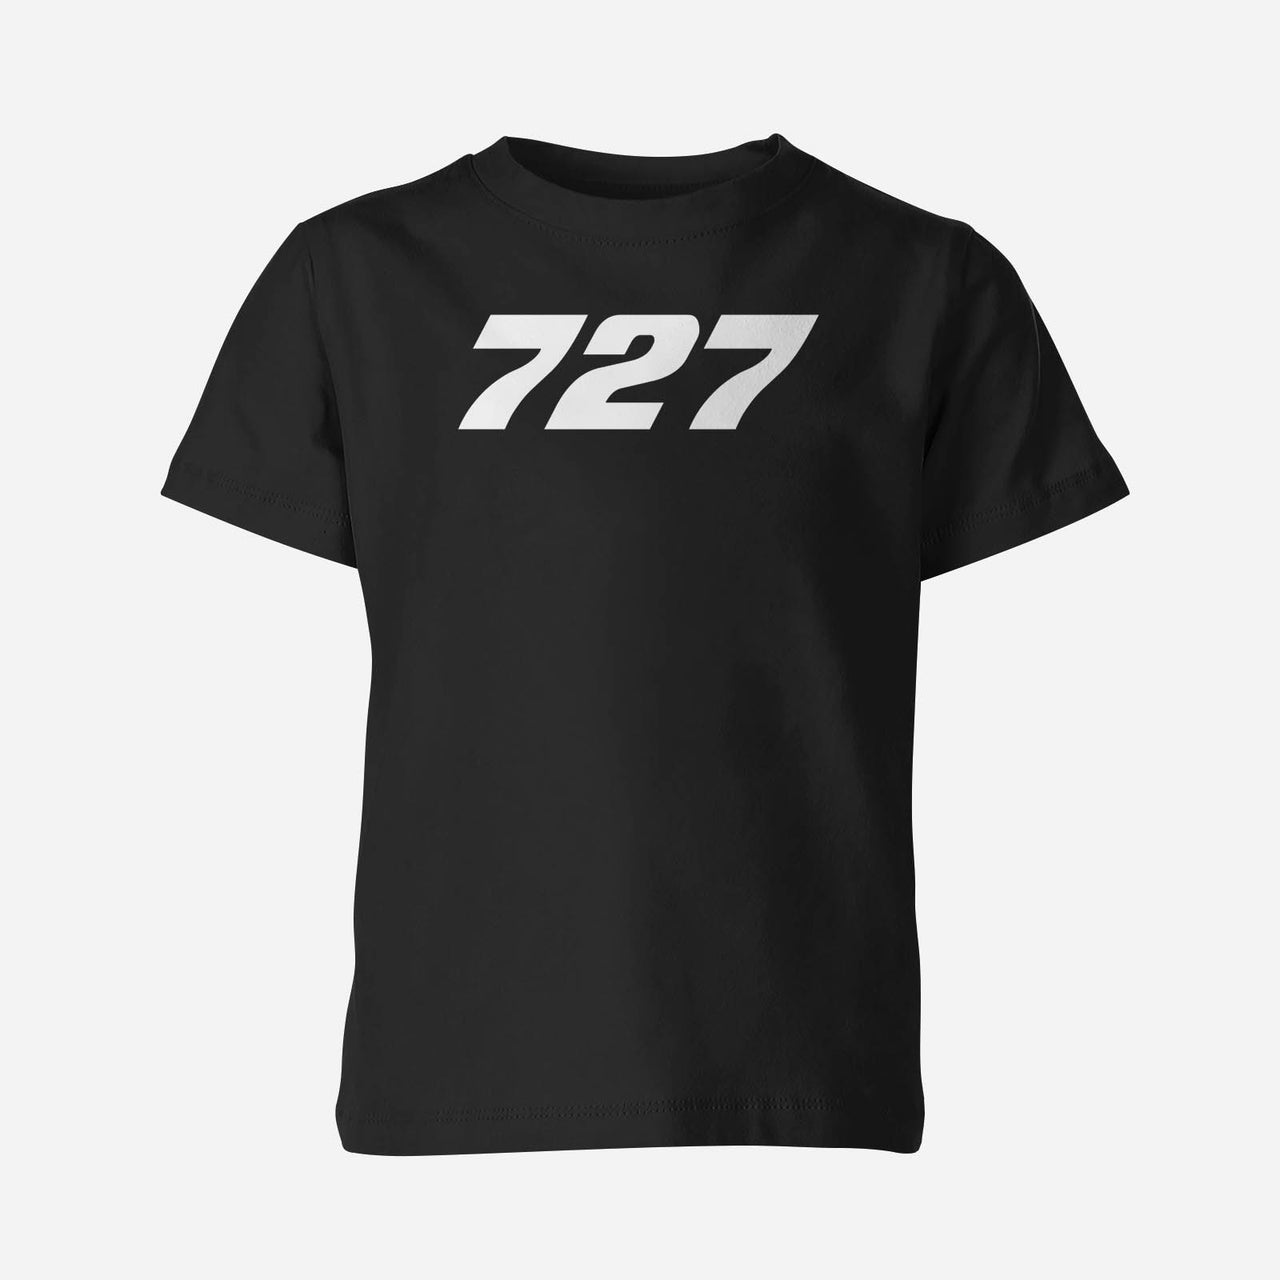 727 Flat Text Designed Children T-Shirts